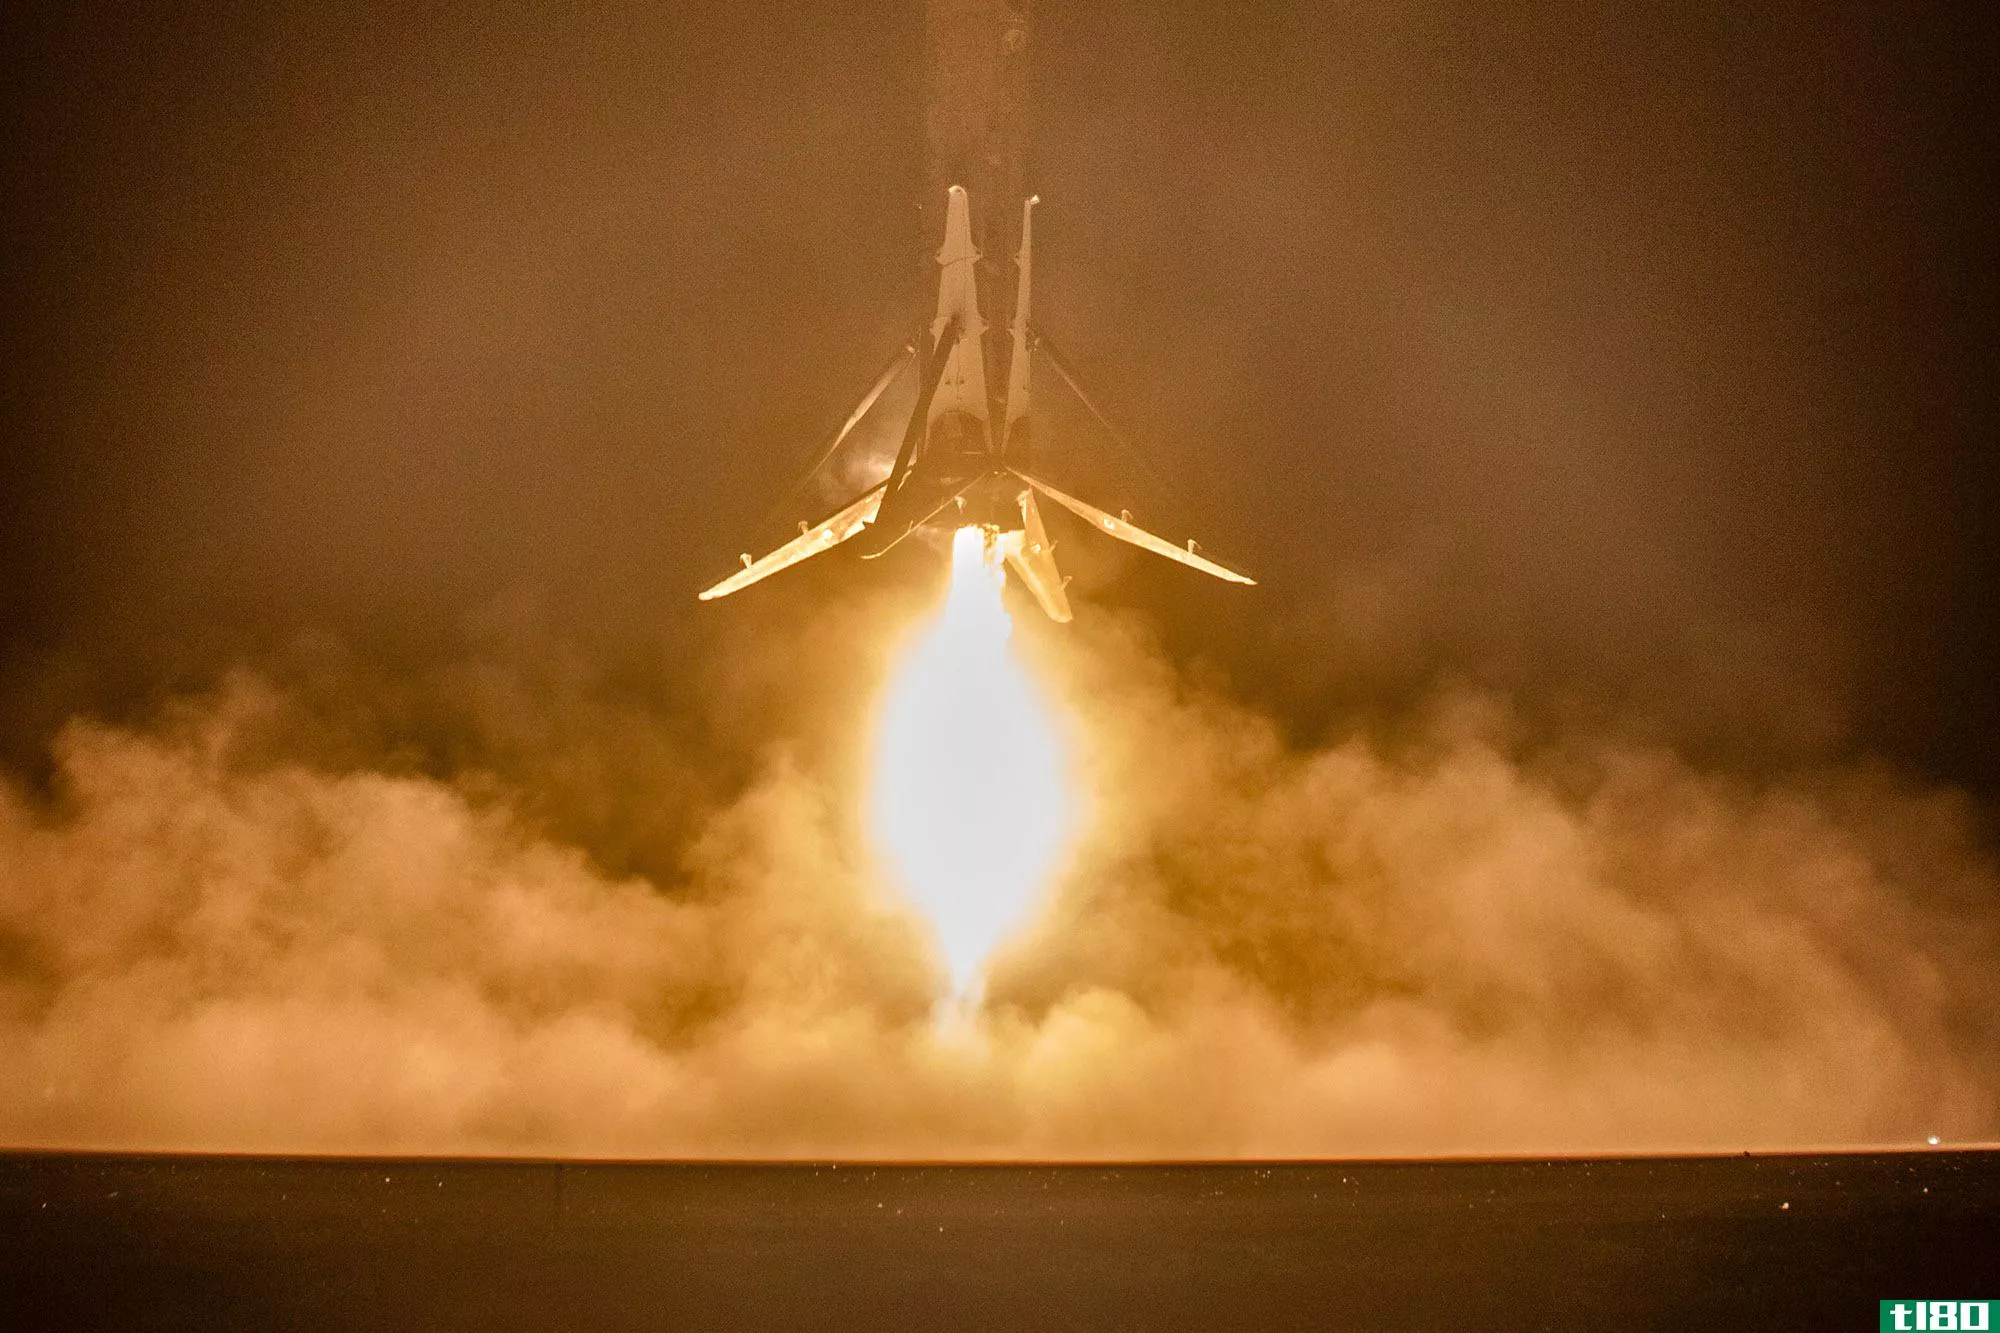 spacex公司将根据其着陆飞行器的测试结果对其“猎鹰9号”火箭进行改装